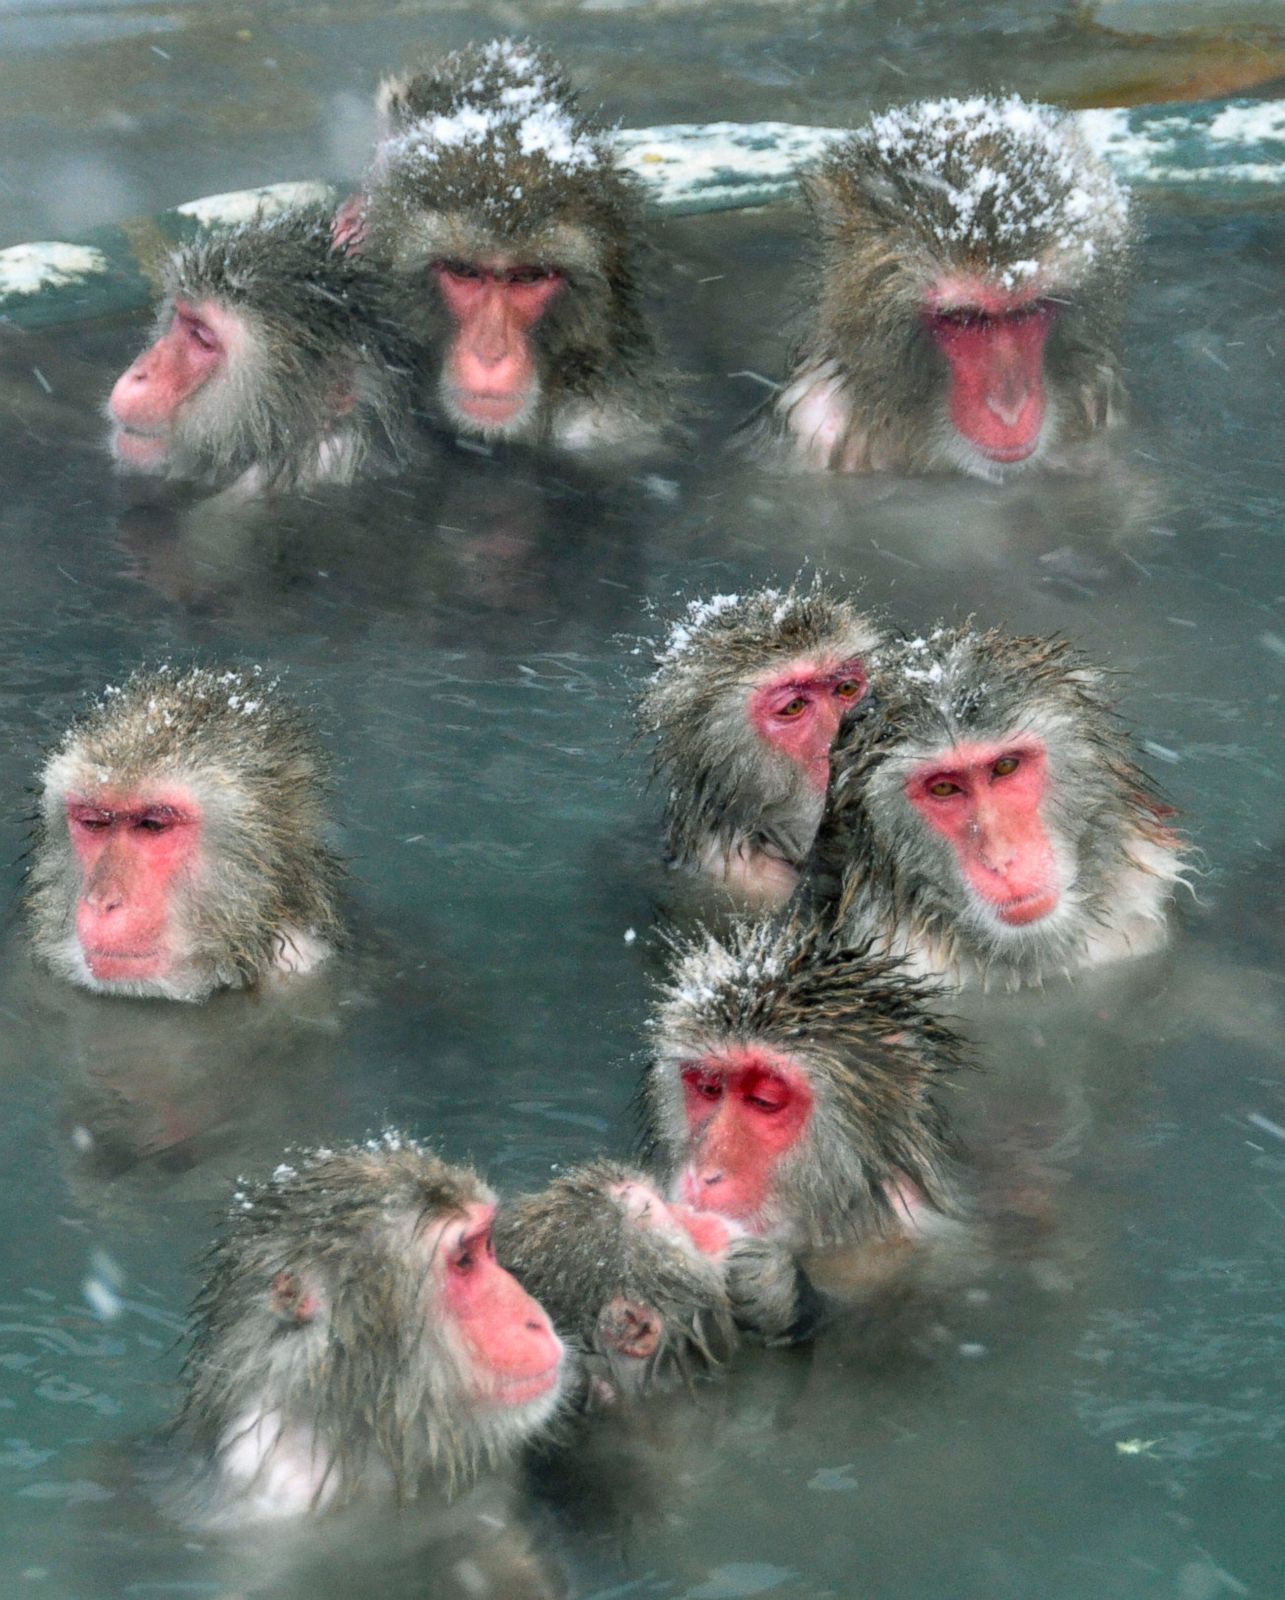 Watch Snow Monkeys Take the Plunge Photos ABC News